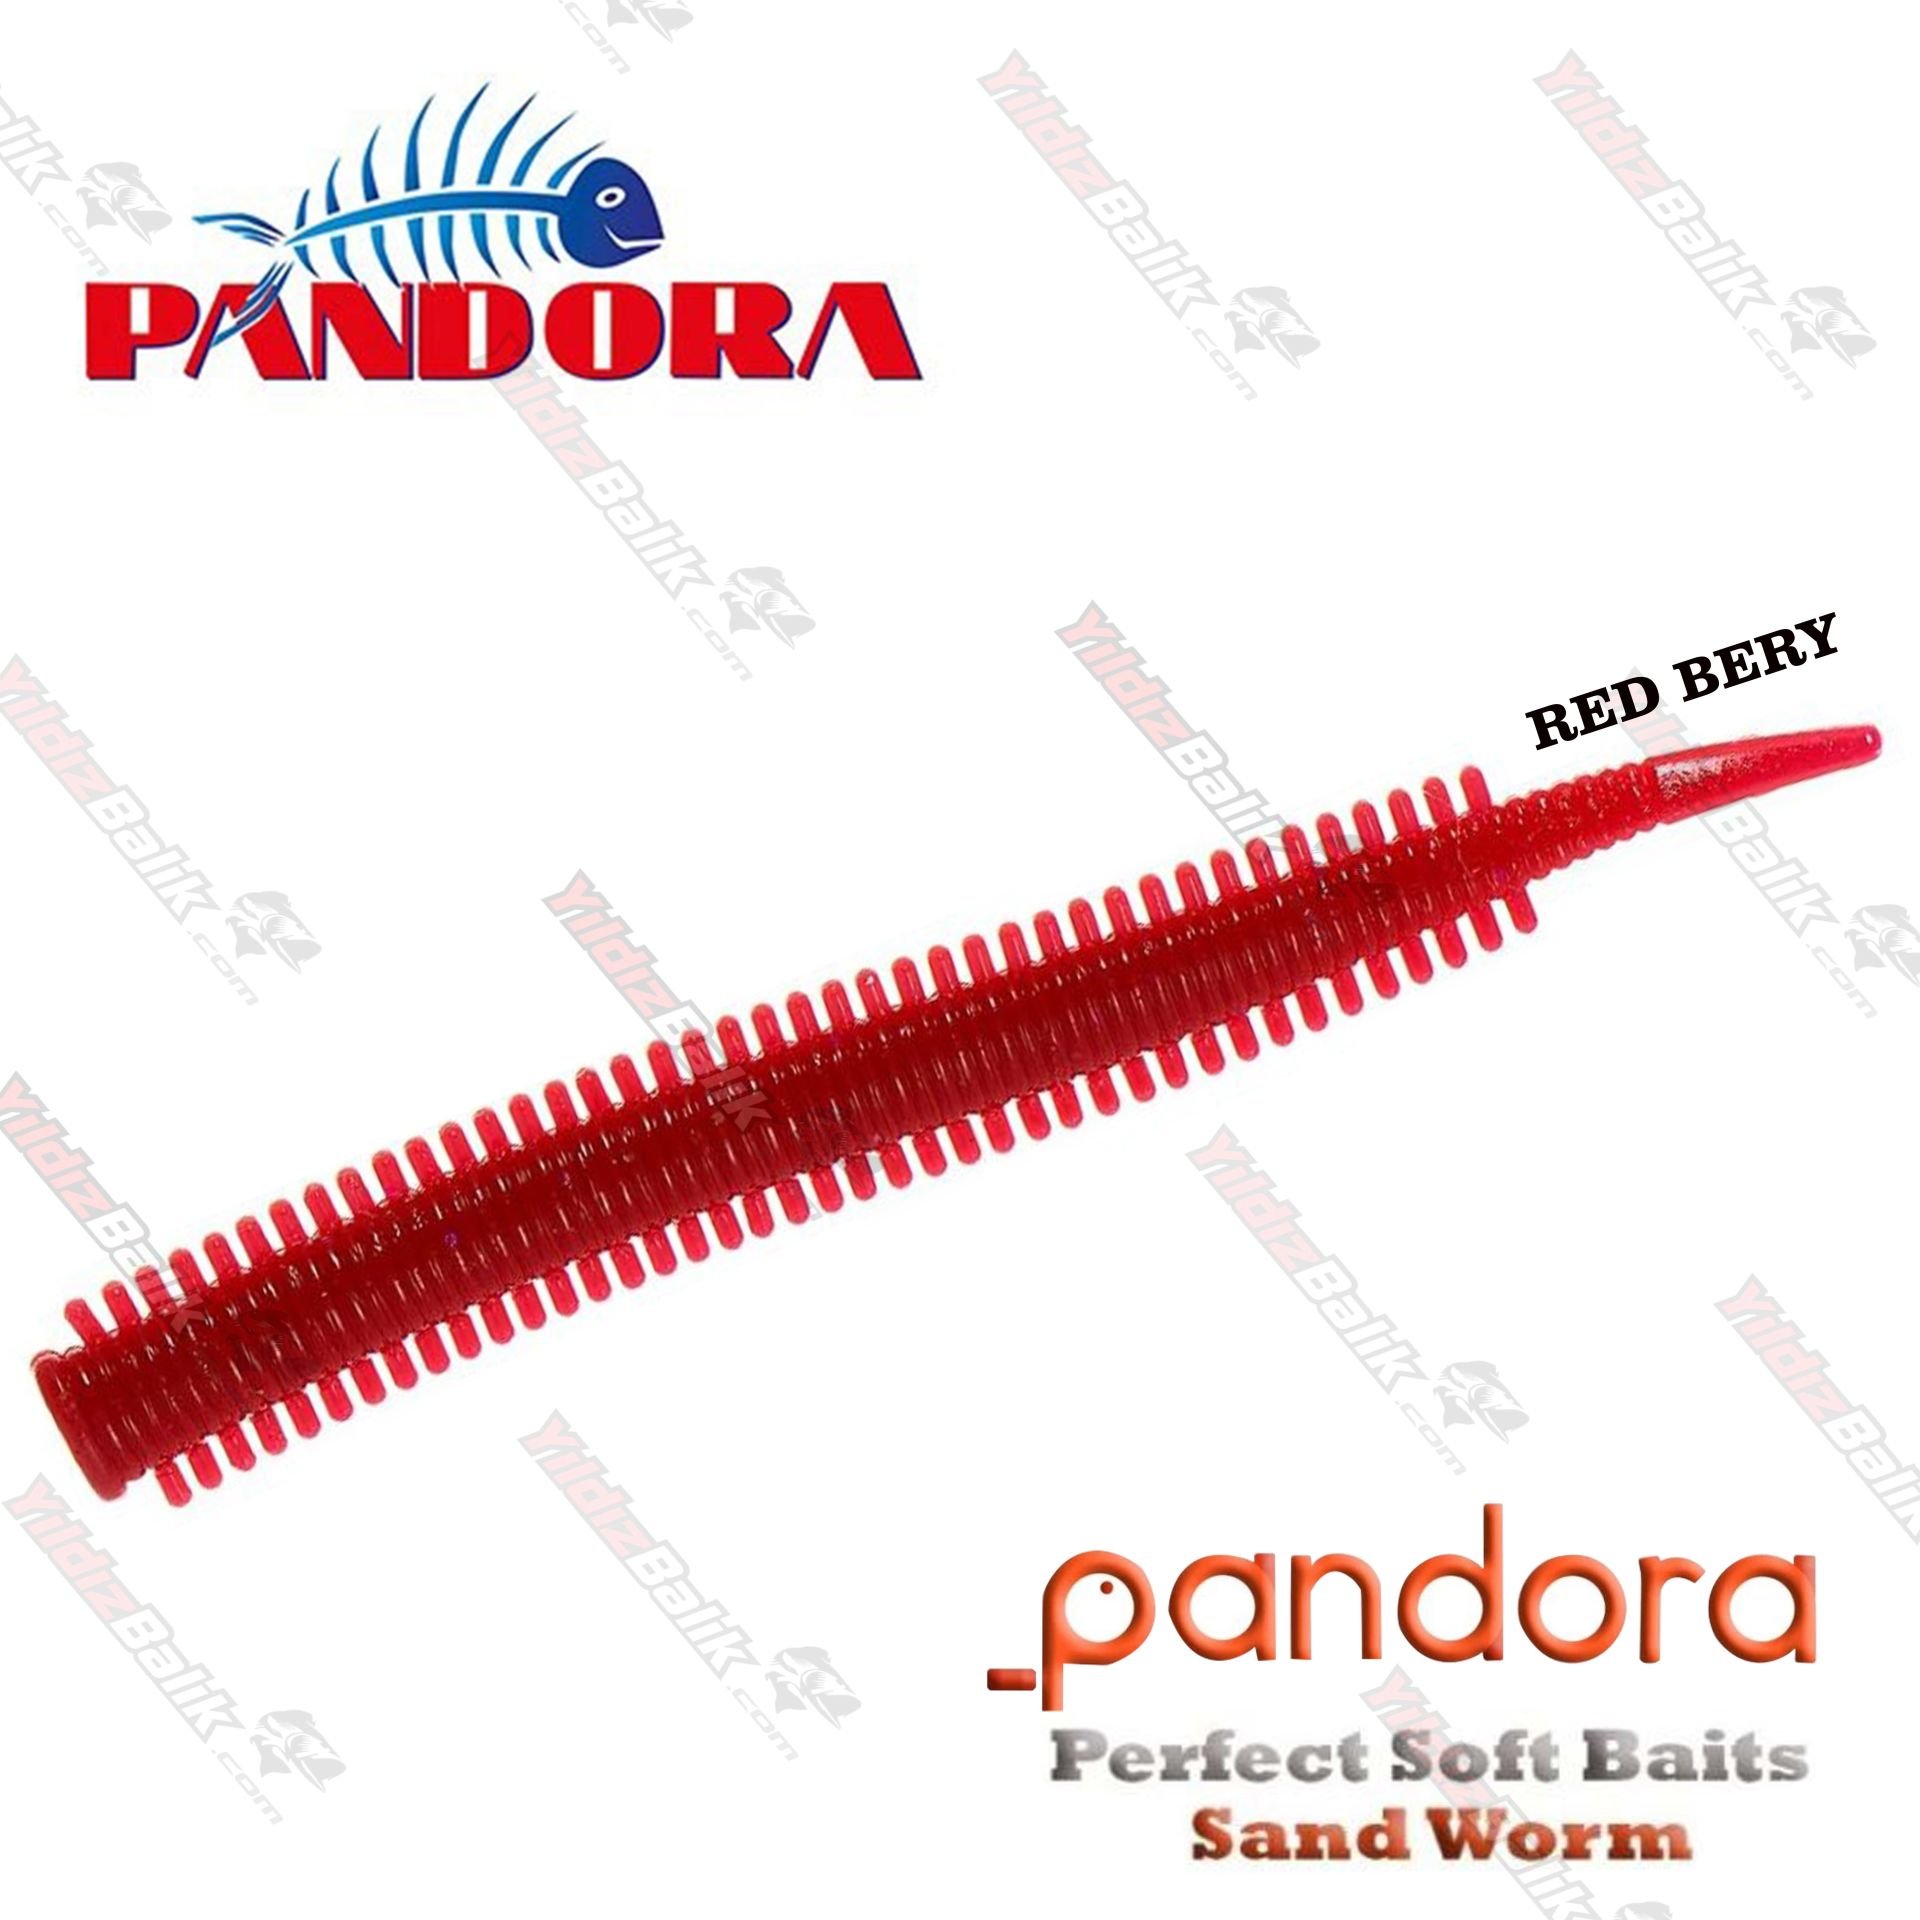 Pandora Perfect Soft Baits Sandworm 7 cm RED BERY Pandora Silikon